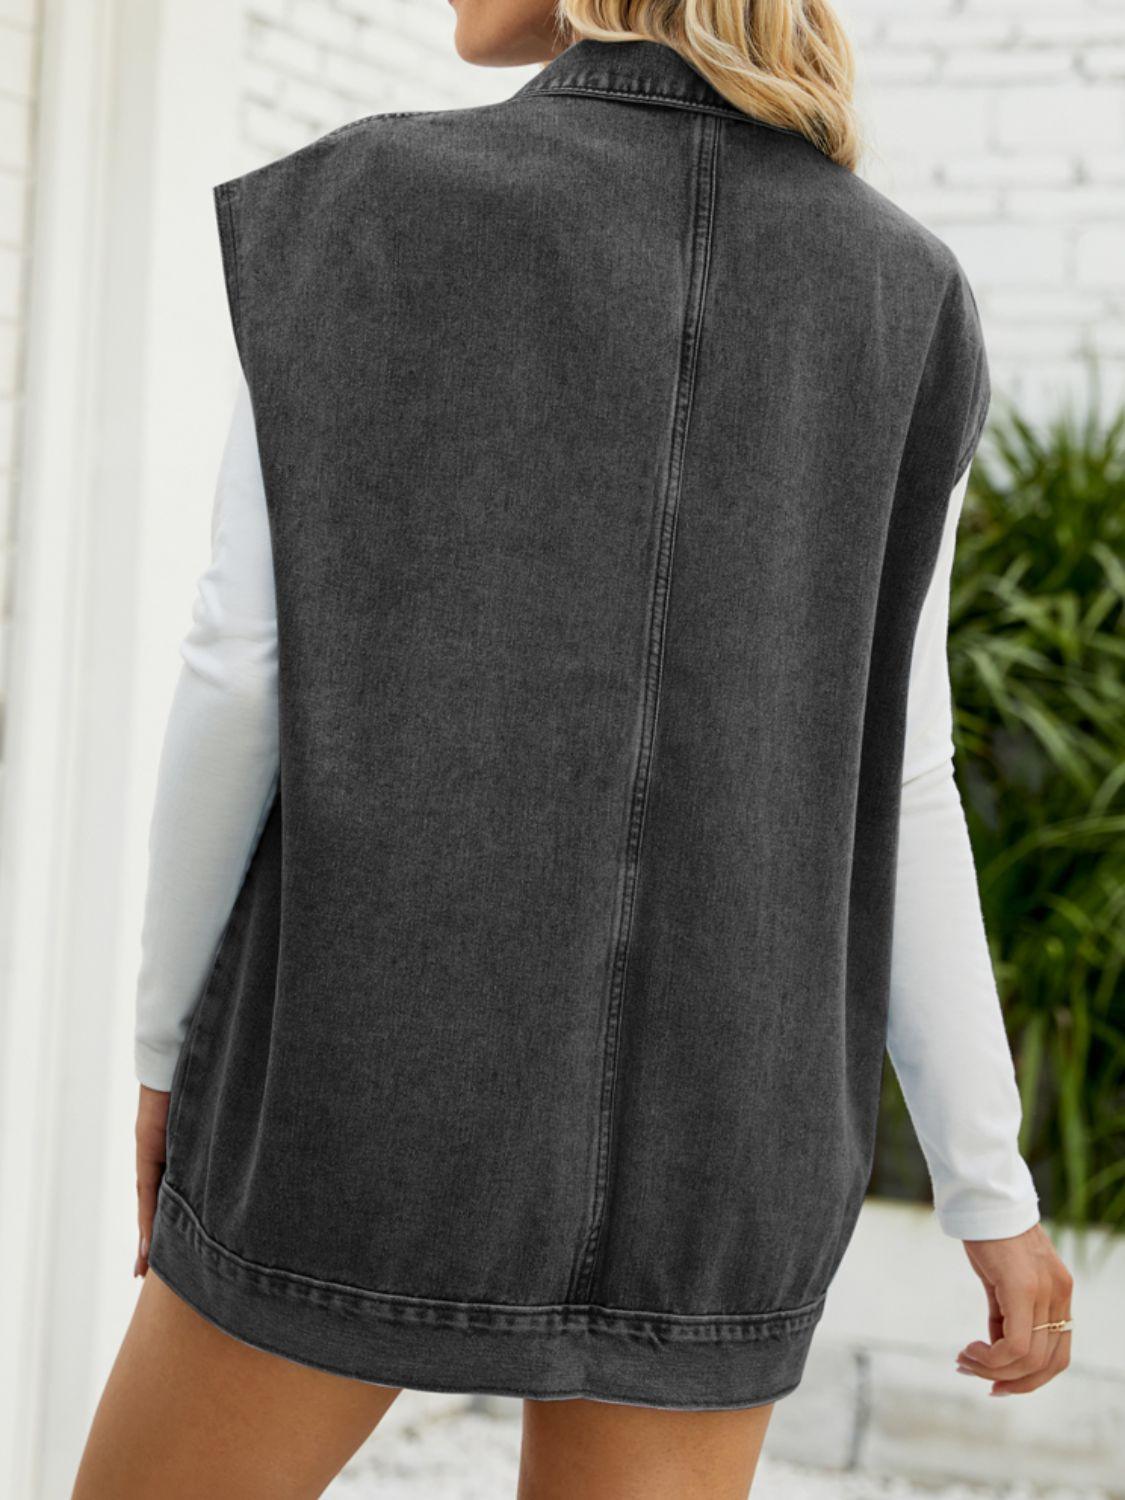 Collared Neck Sleeveless Denim Vest Top with Pockets - Closet of Ren